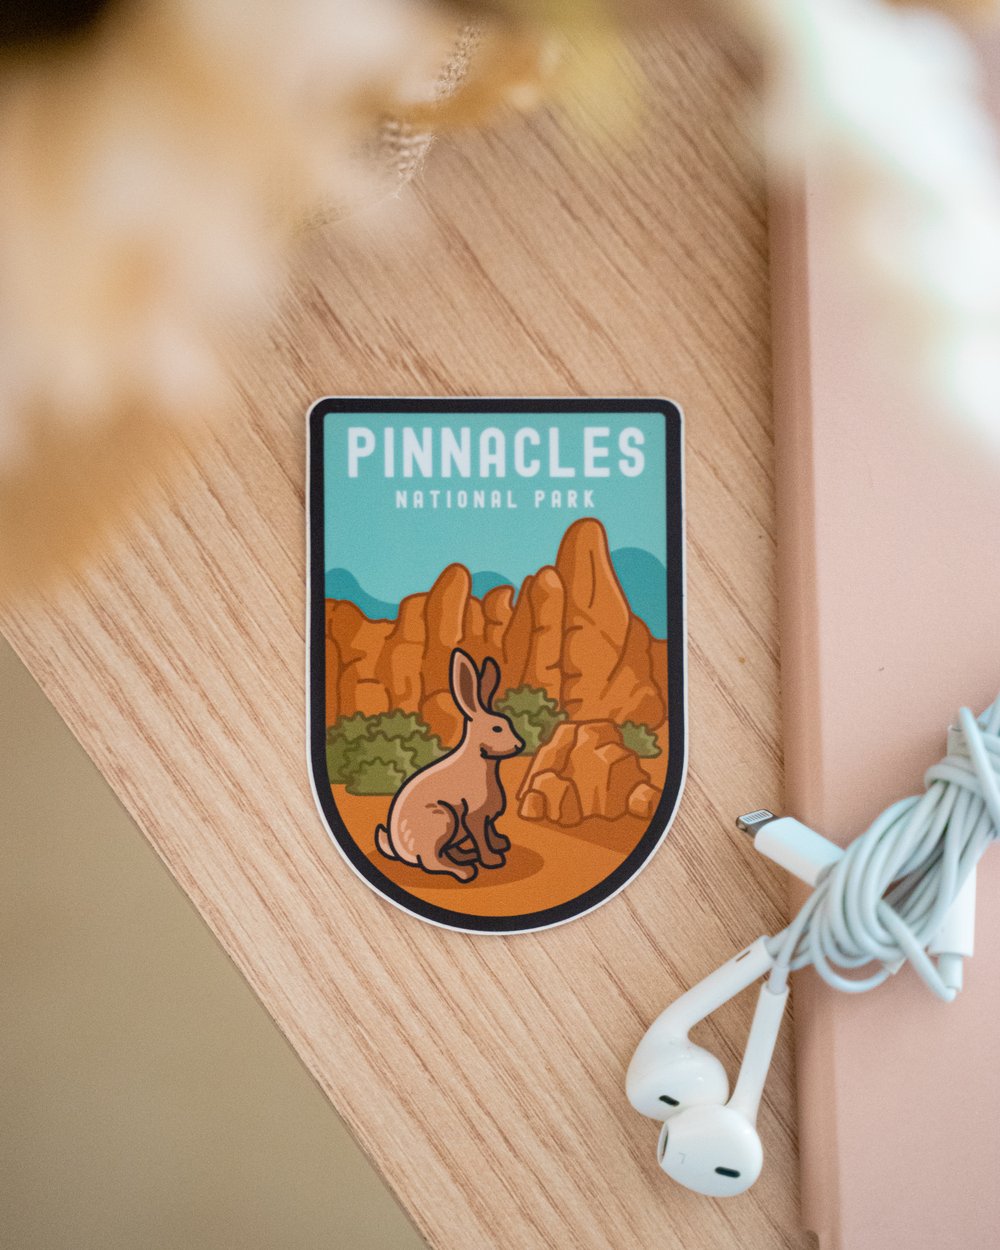 a Pinnacles National Park sticker